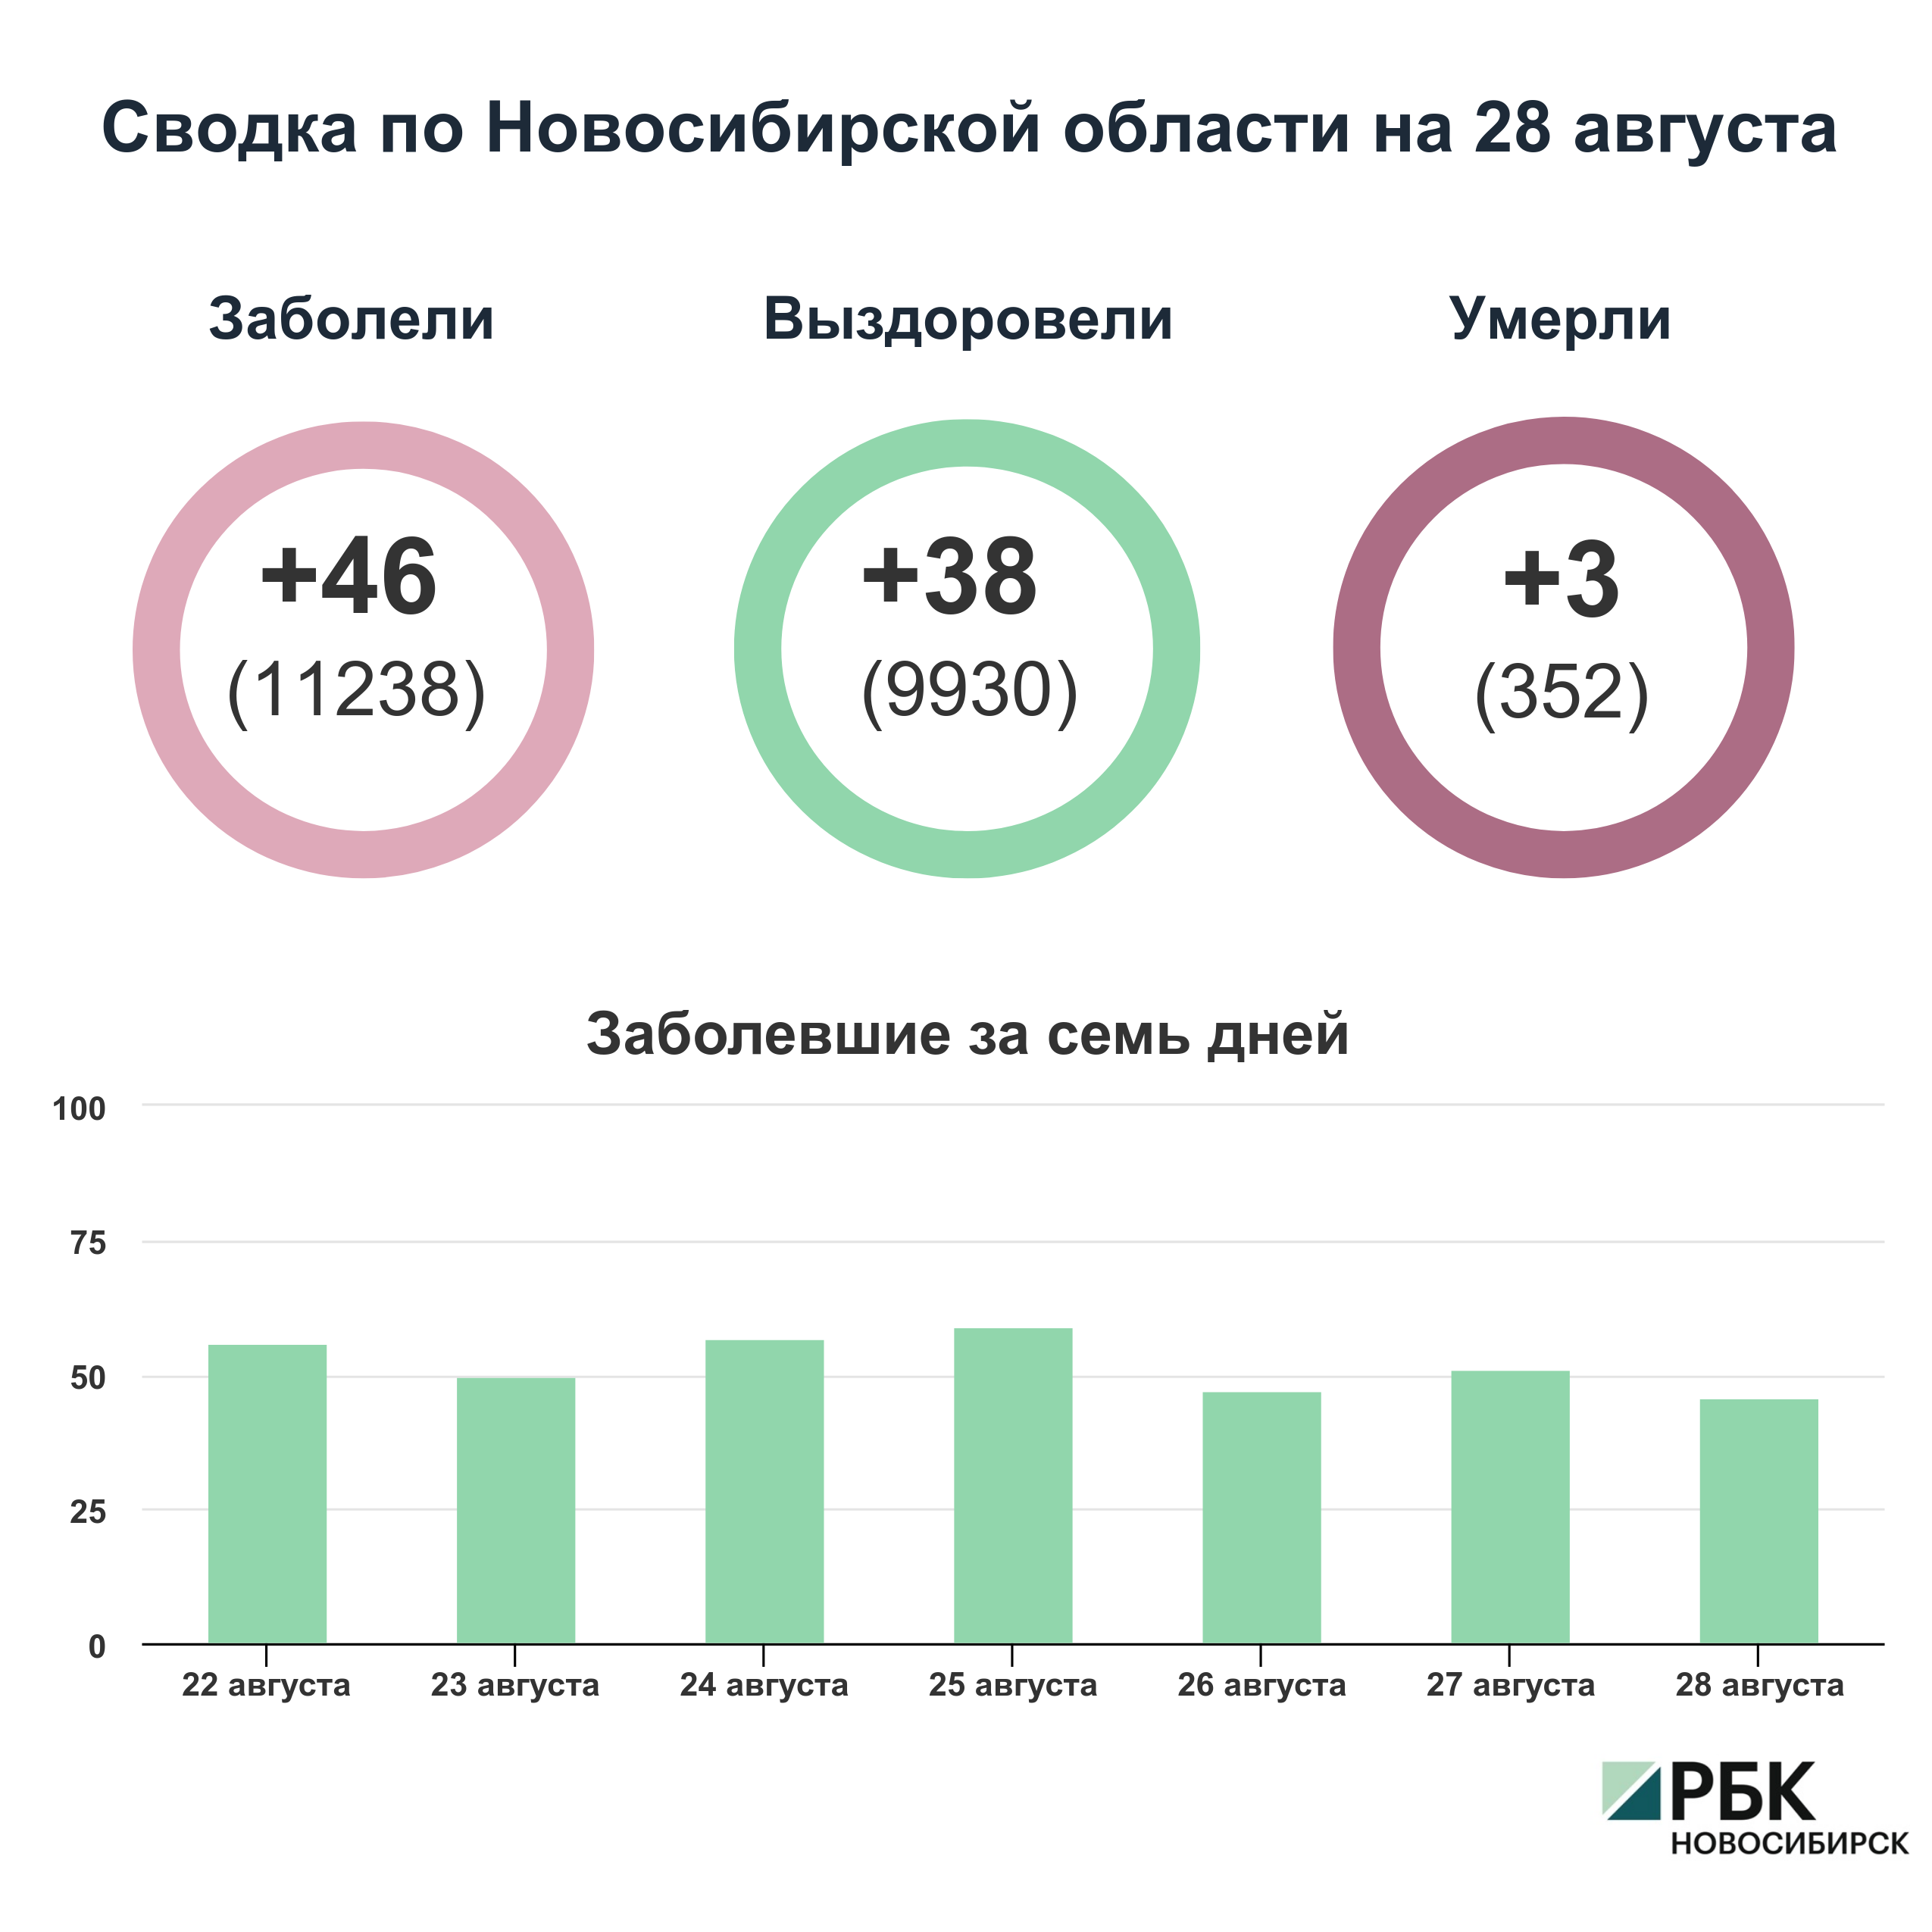 Коронавирус в Новосибирске: сводка на 28 августа